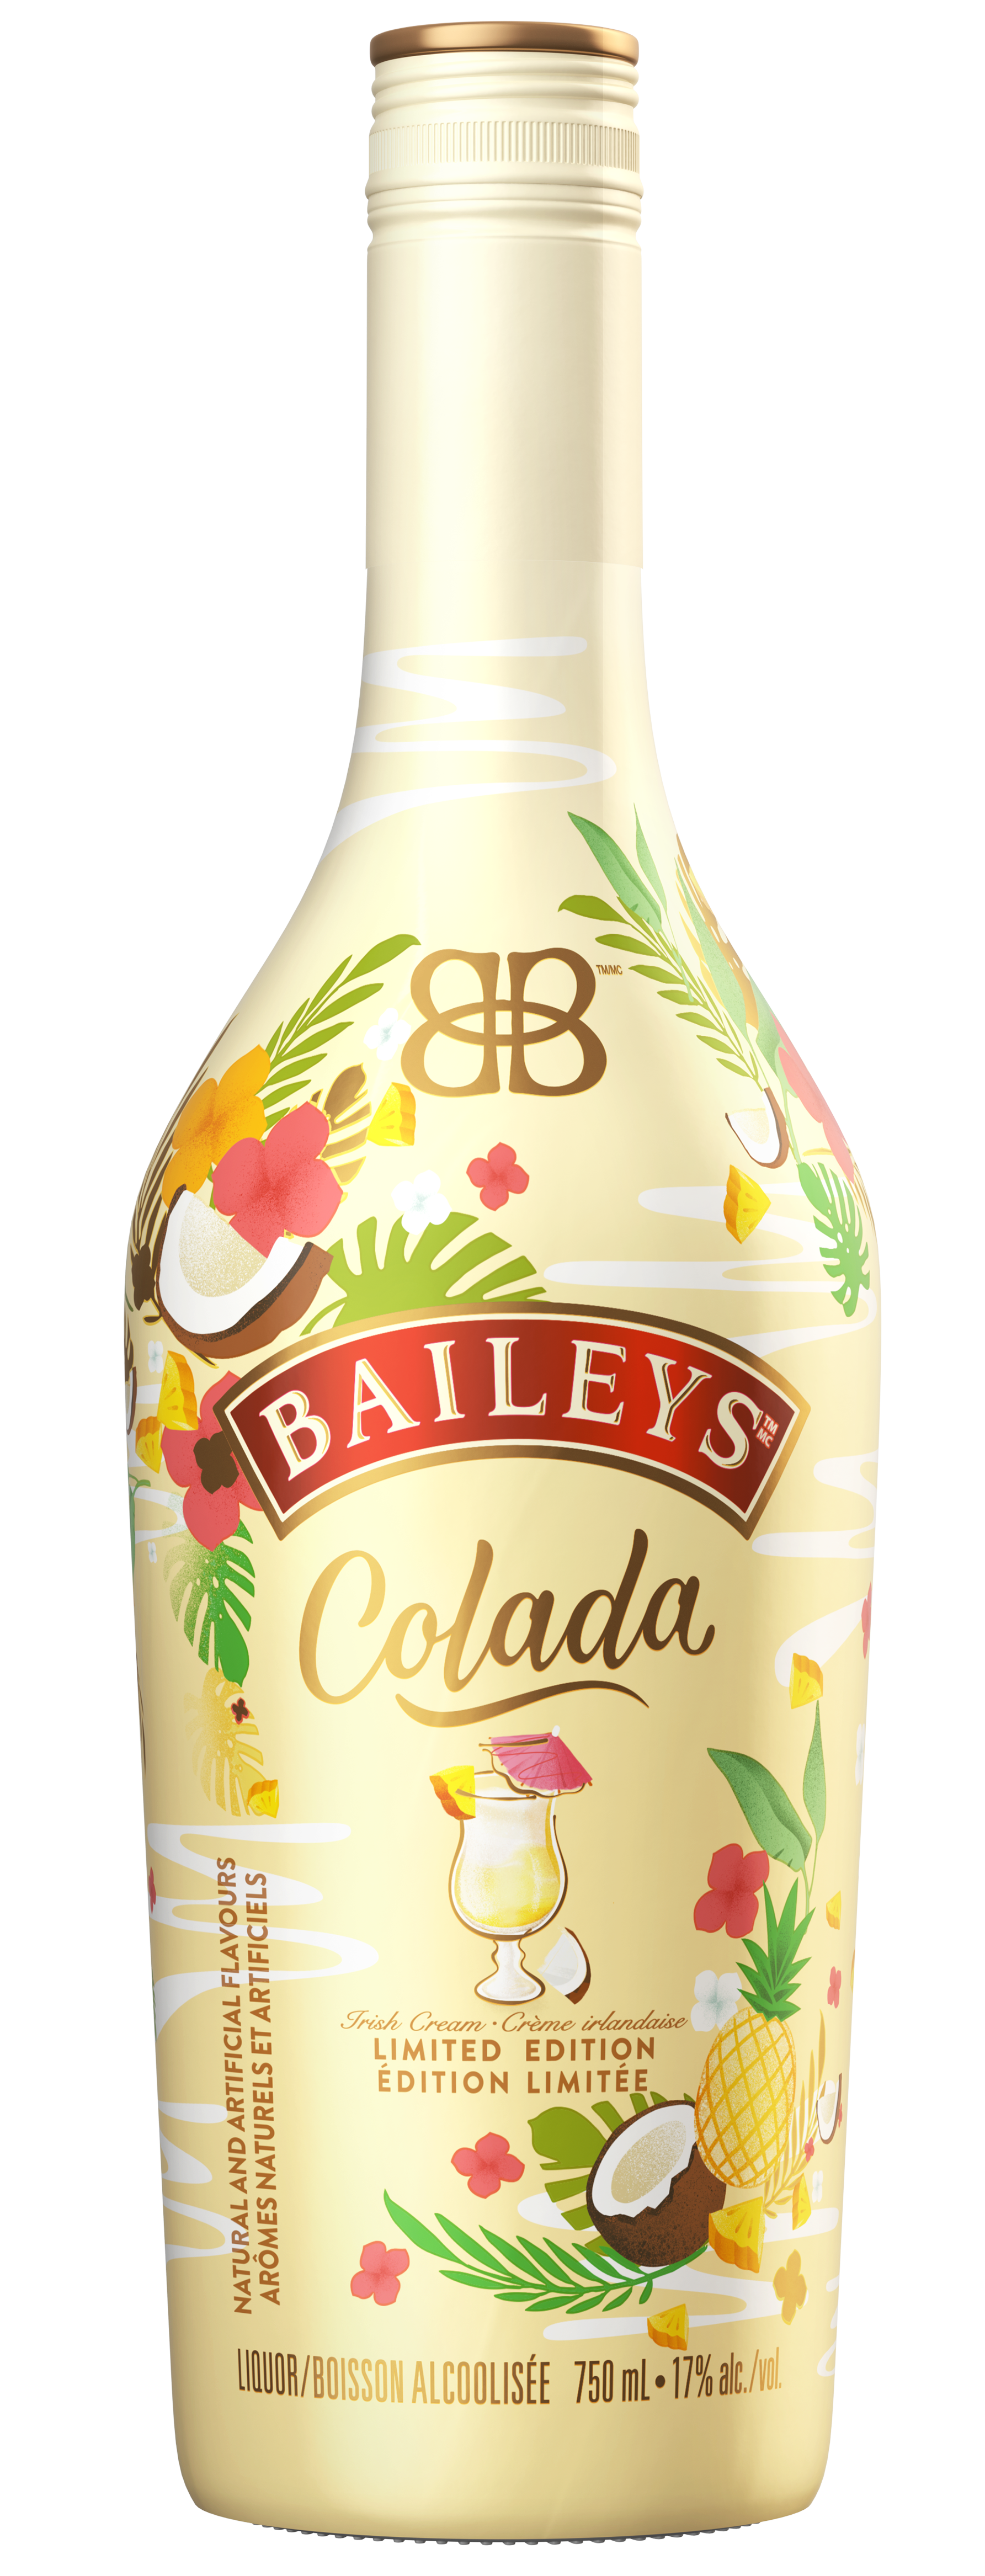 Bottle of Baileys Colada Flavour